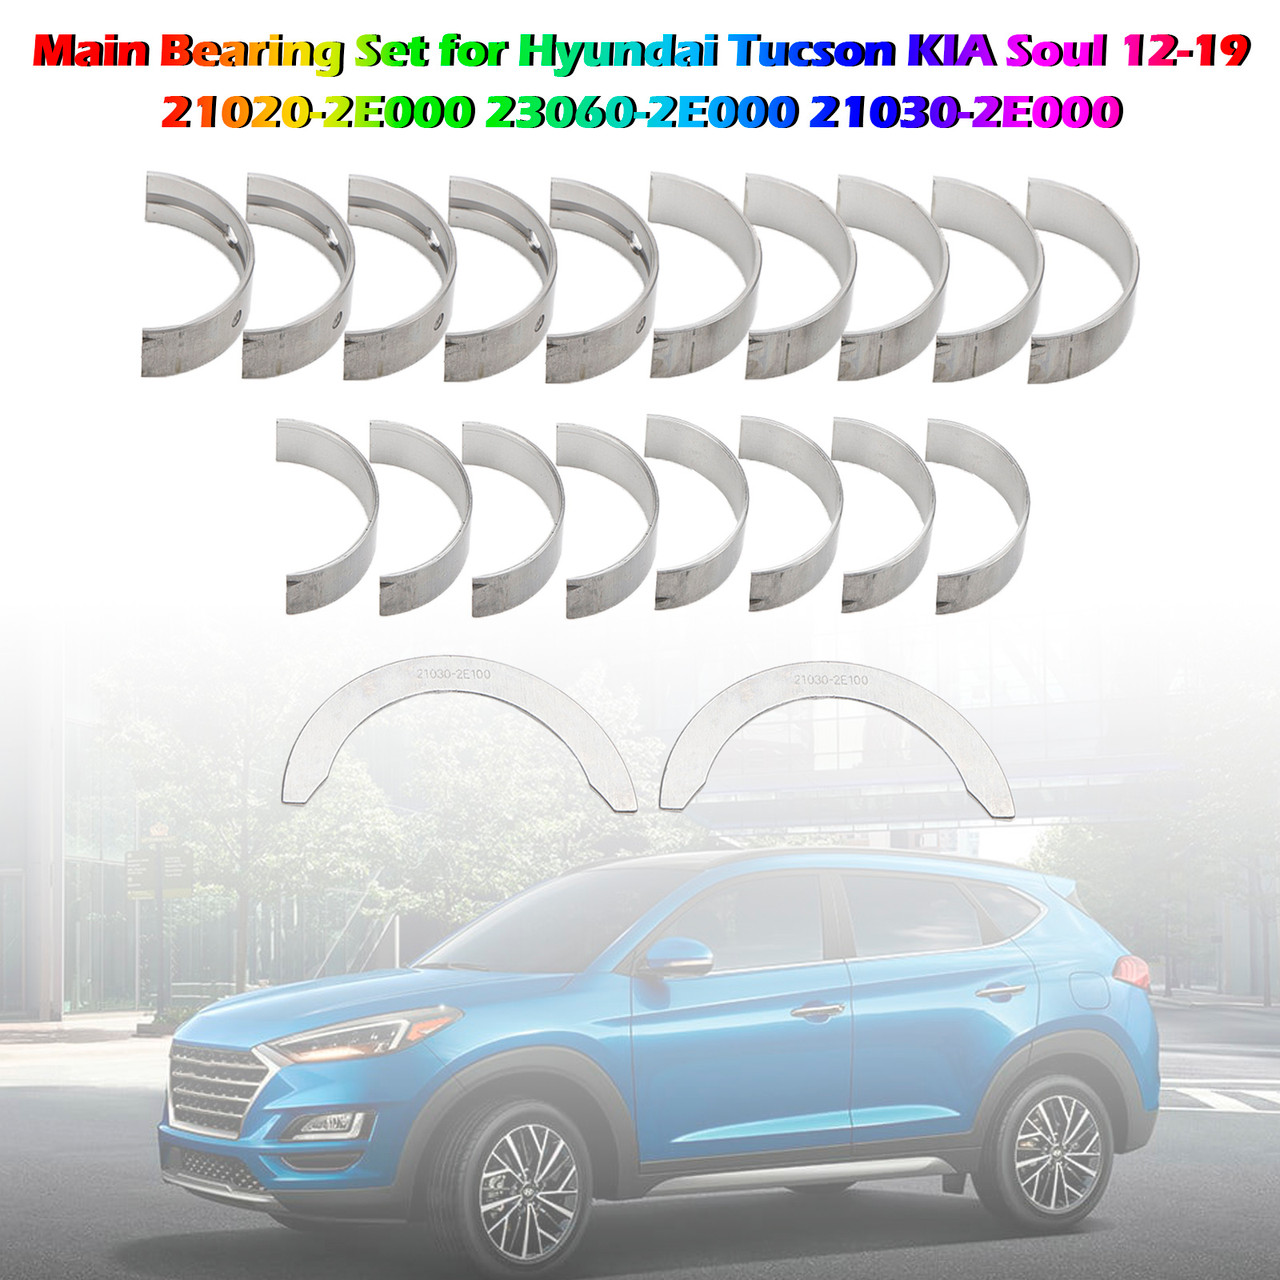 Main Bearing Set for Hyundai Tucson KIA Soul 12-19 21020-2E000 23060-2E000